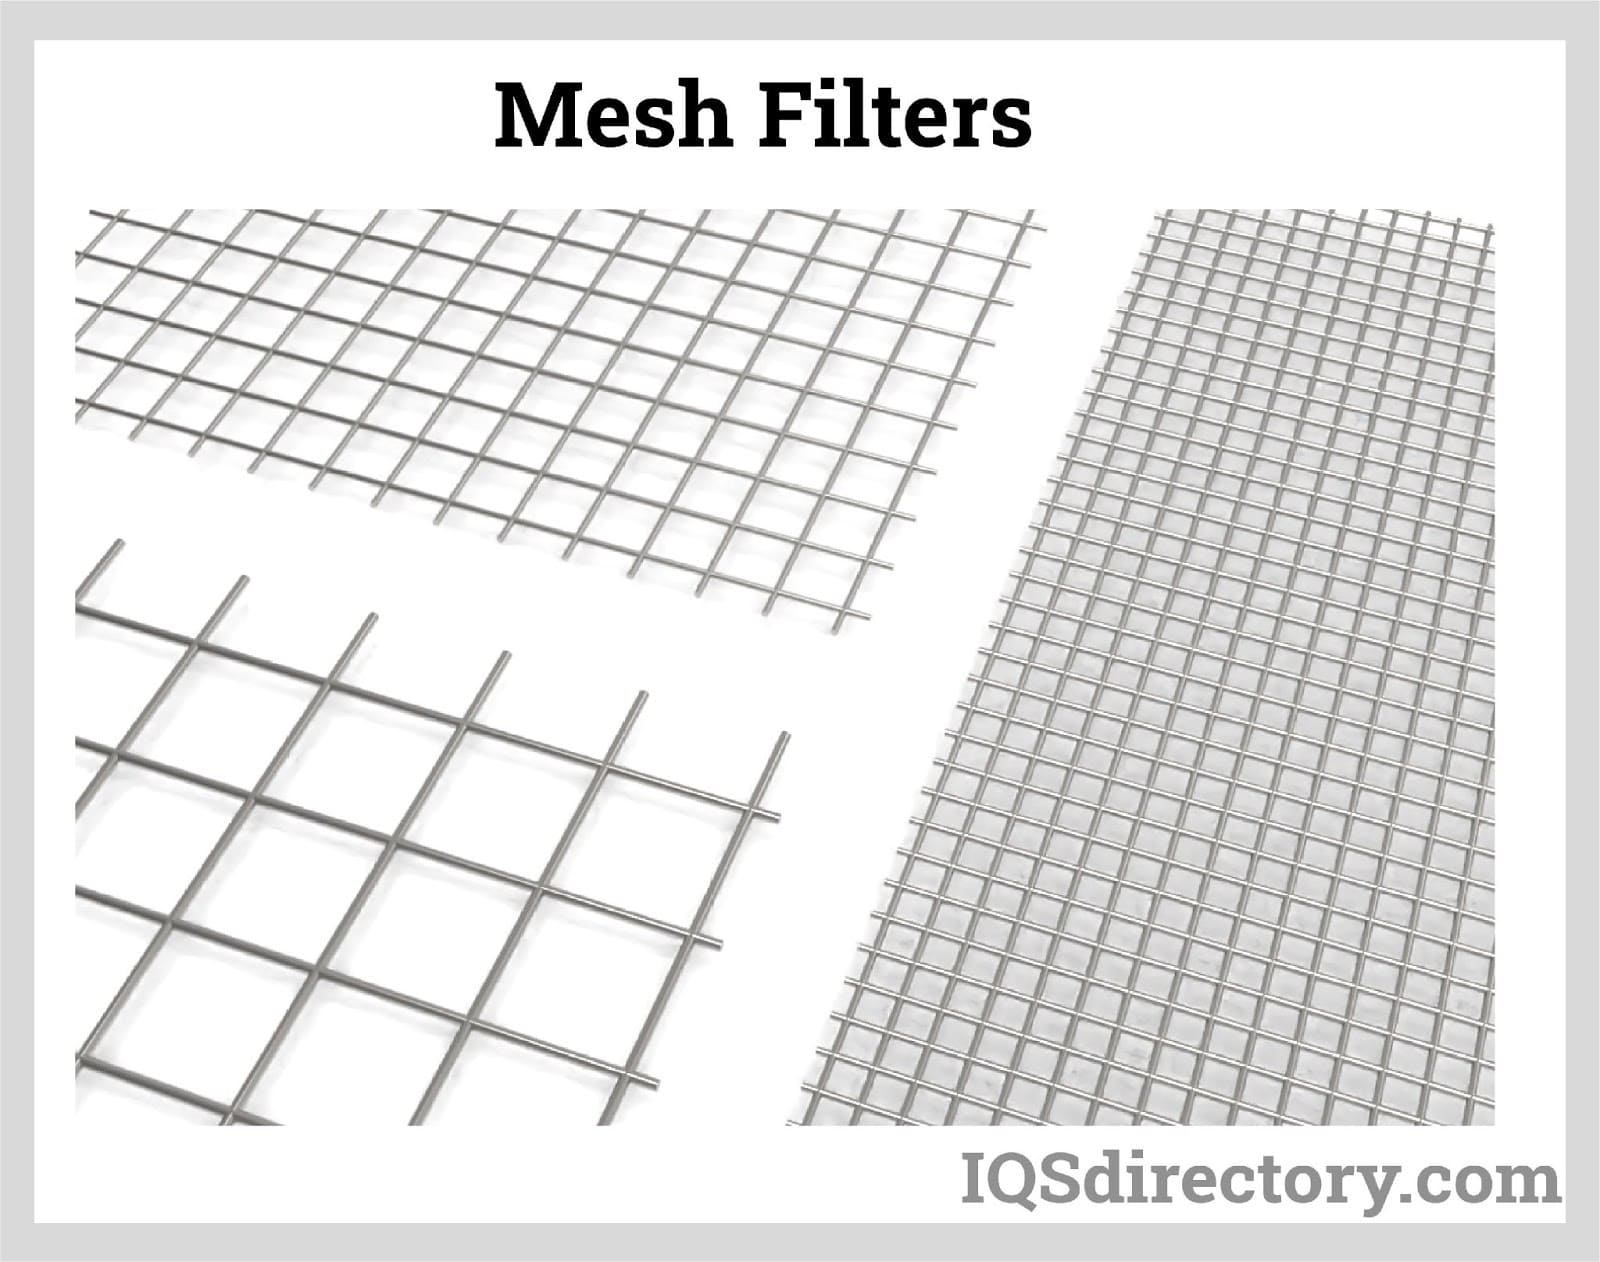 https://www.iqsdirectory.com/articles/wire-mesh/metal-mesh/mesh-filters.jpg